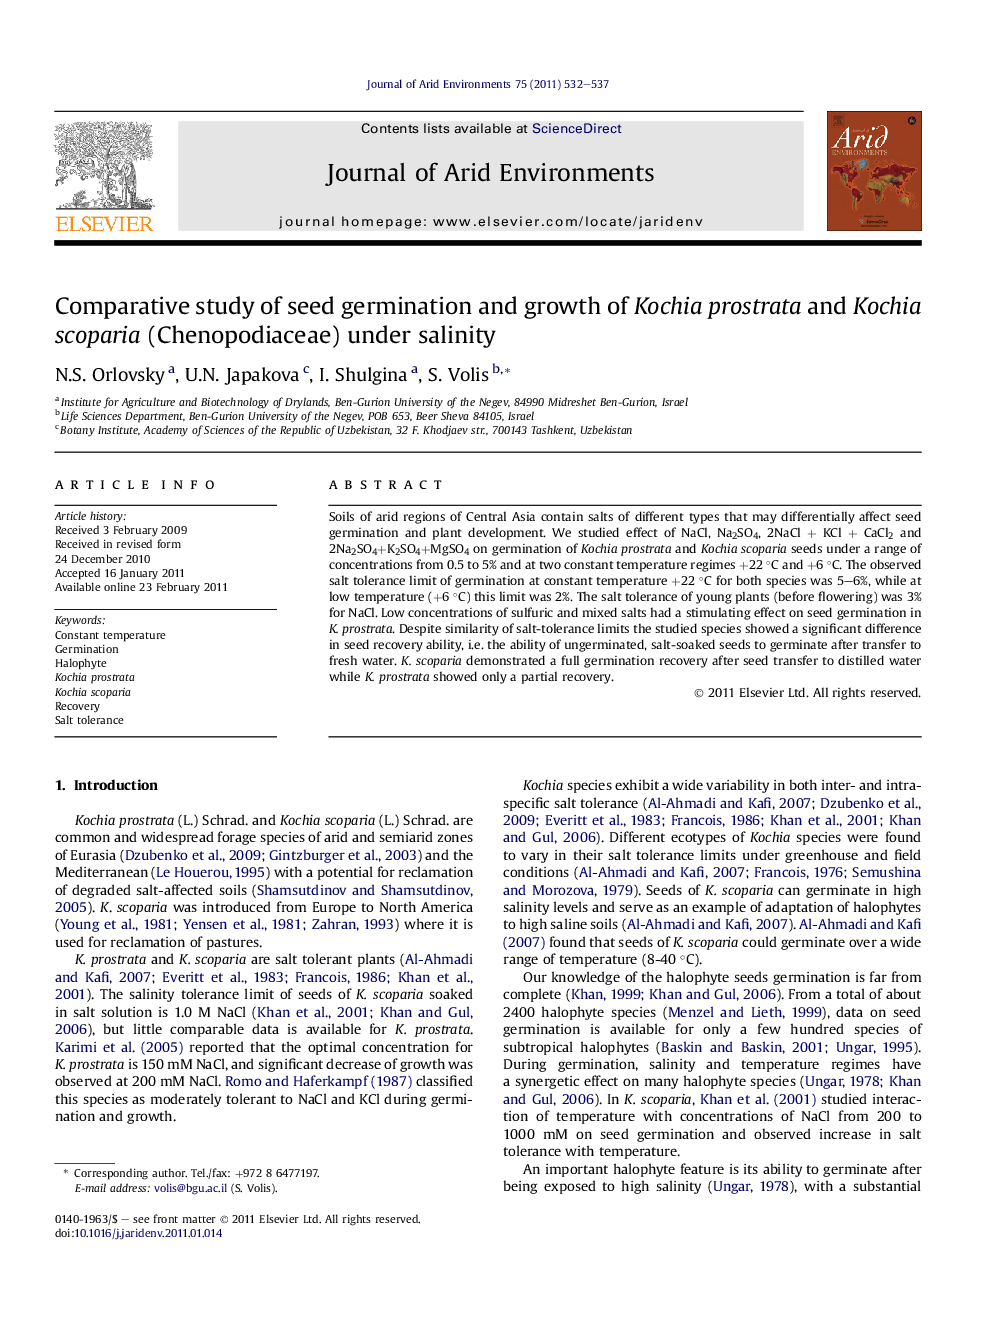 Comparative study of seed germination and growth of Kochia prostrata and Kochia scoparia (Chenopodiaceae) under salinity